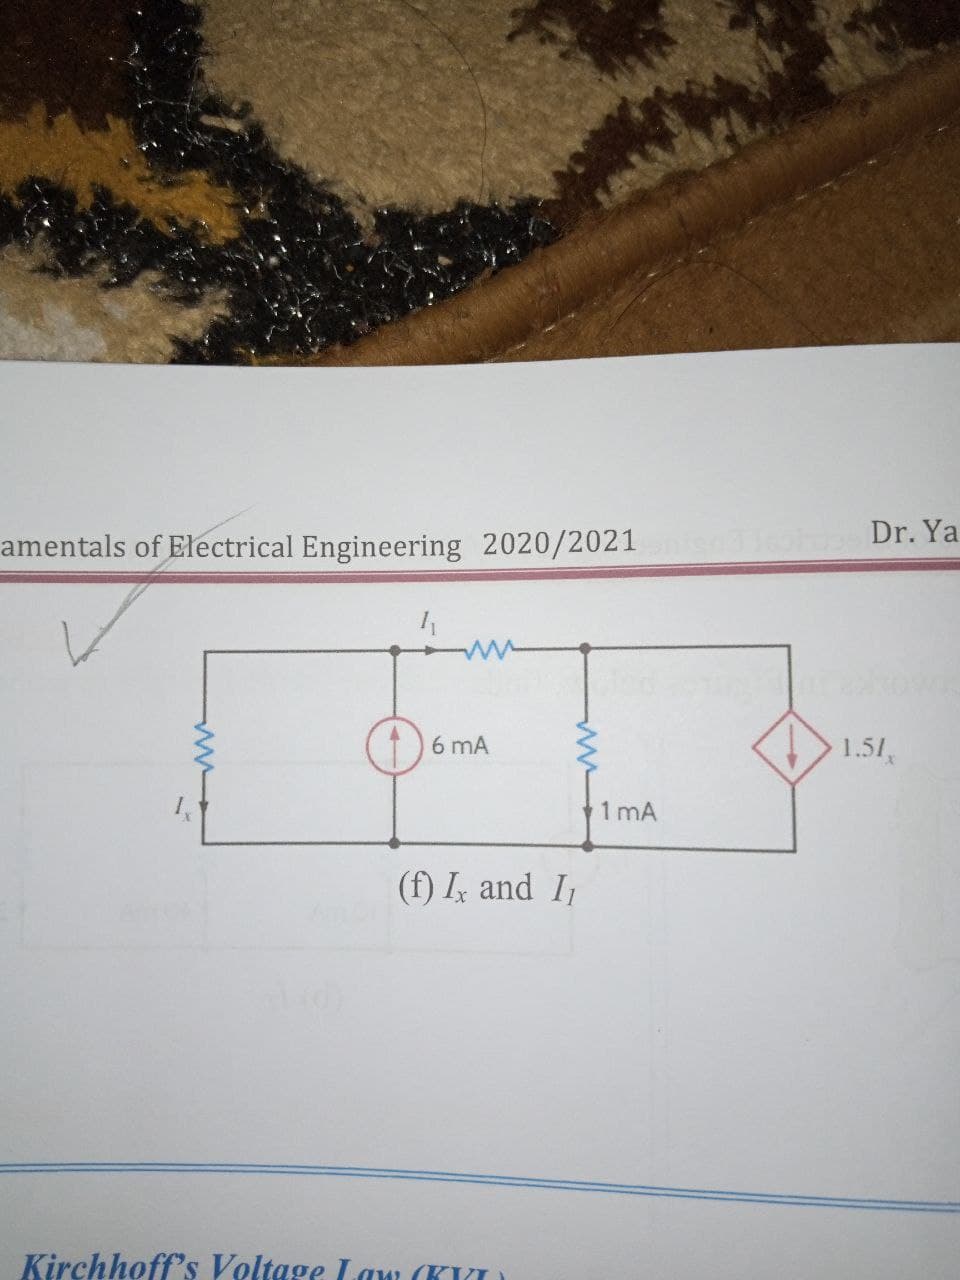 amentals of Electrical Engineering 2020/2021 Dr. Ya
1.51
6 mA
1 mA
(f) I, and I
Kirchhoff's Voltage LanI (KI
